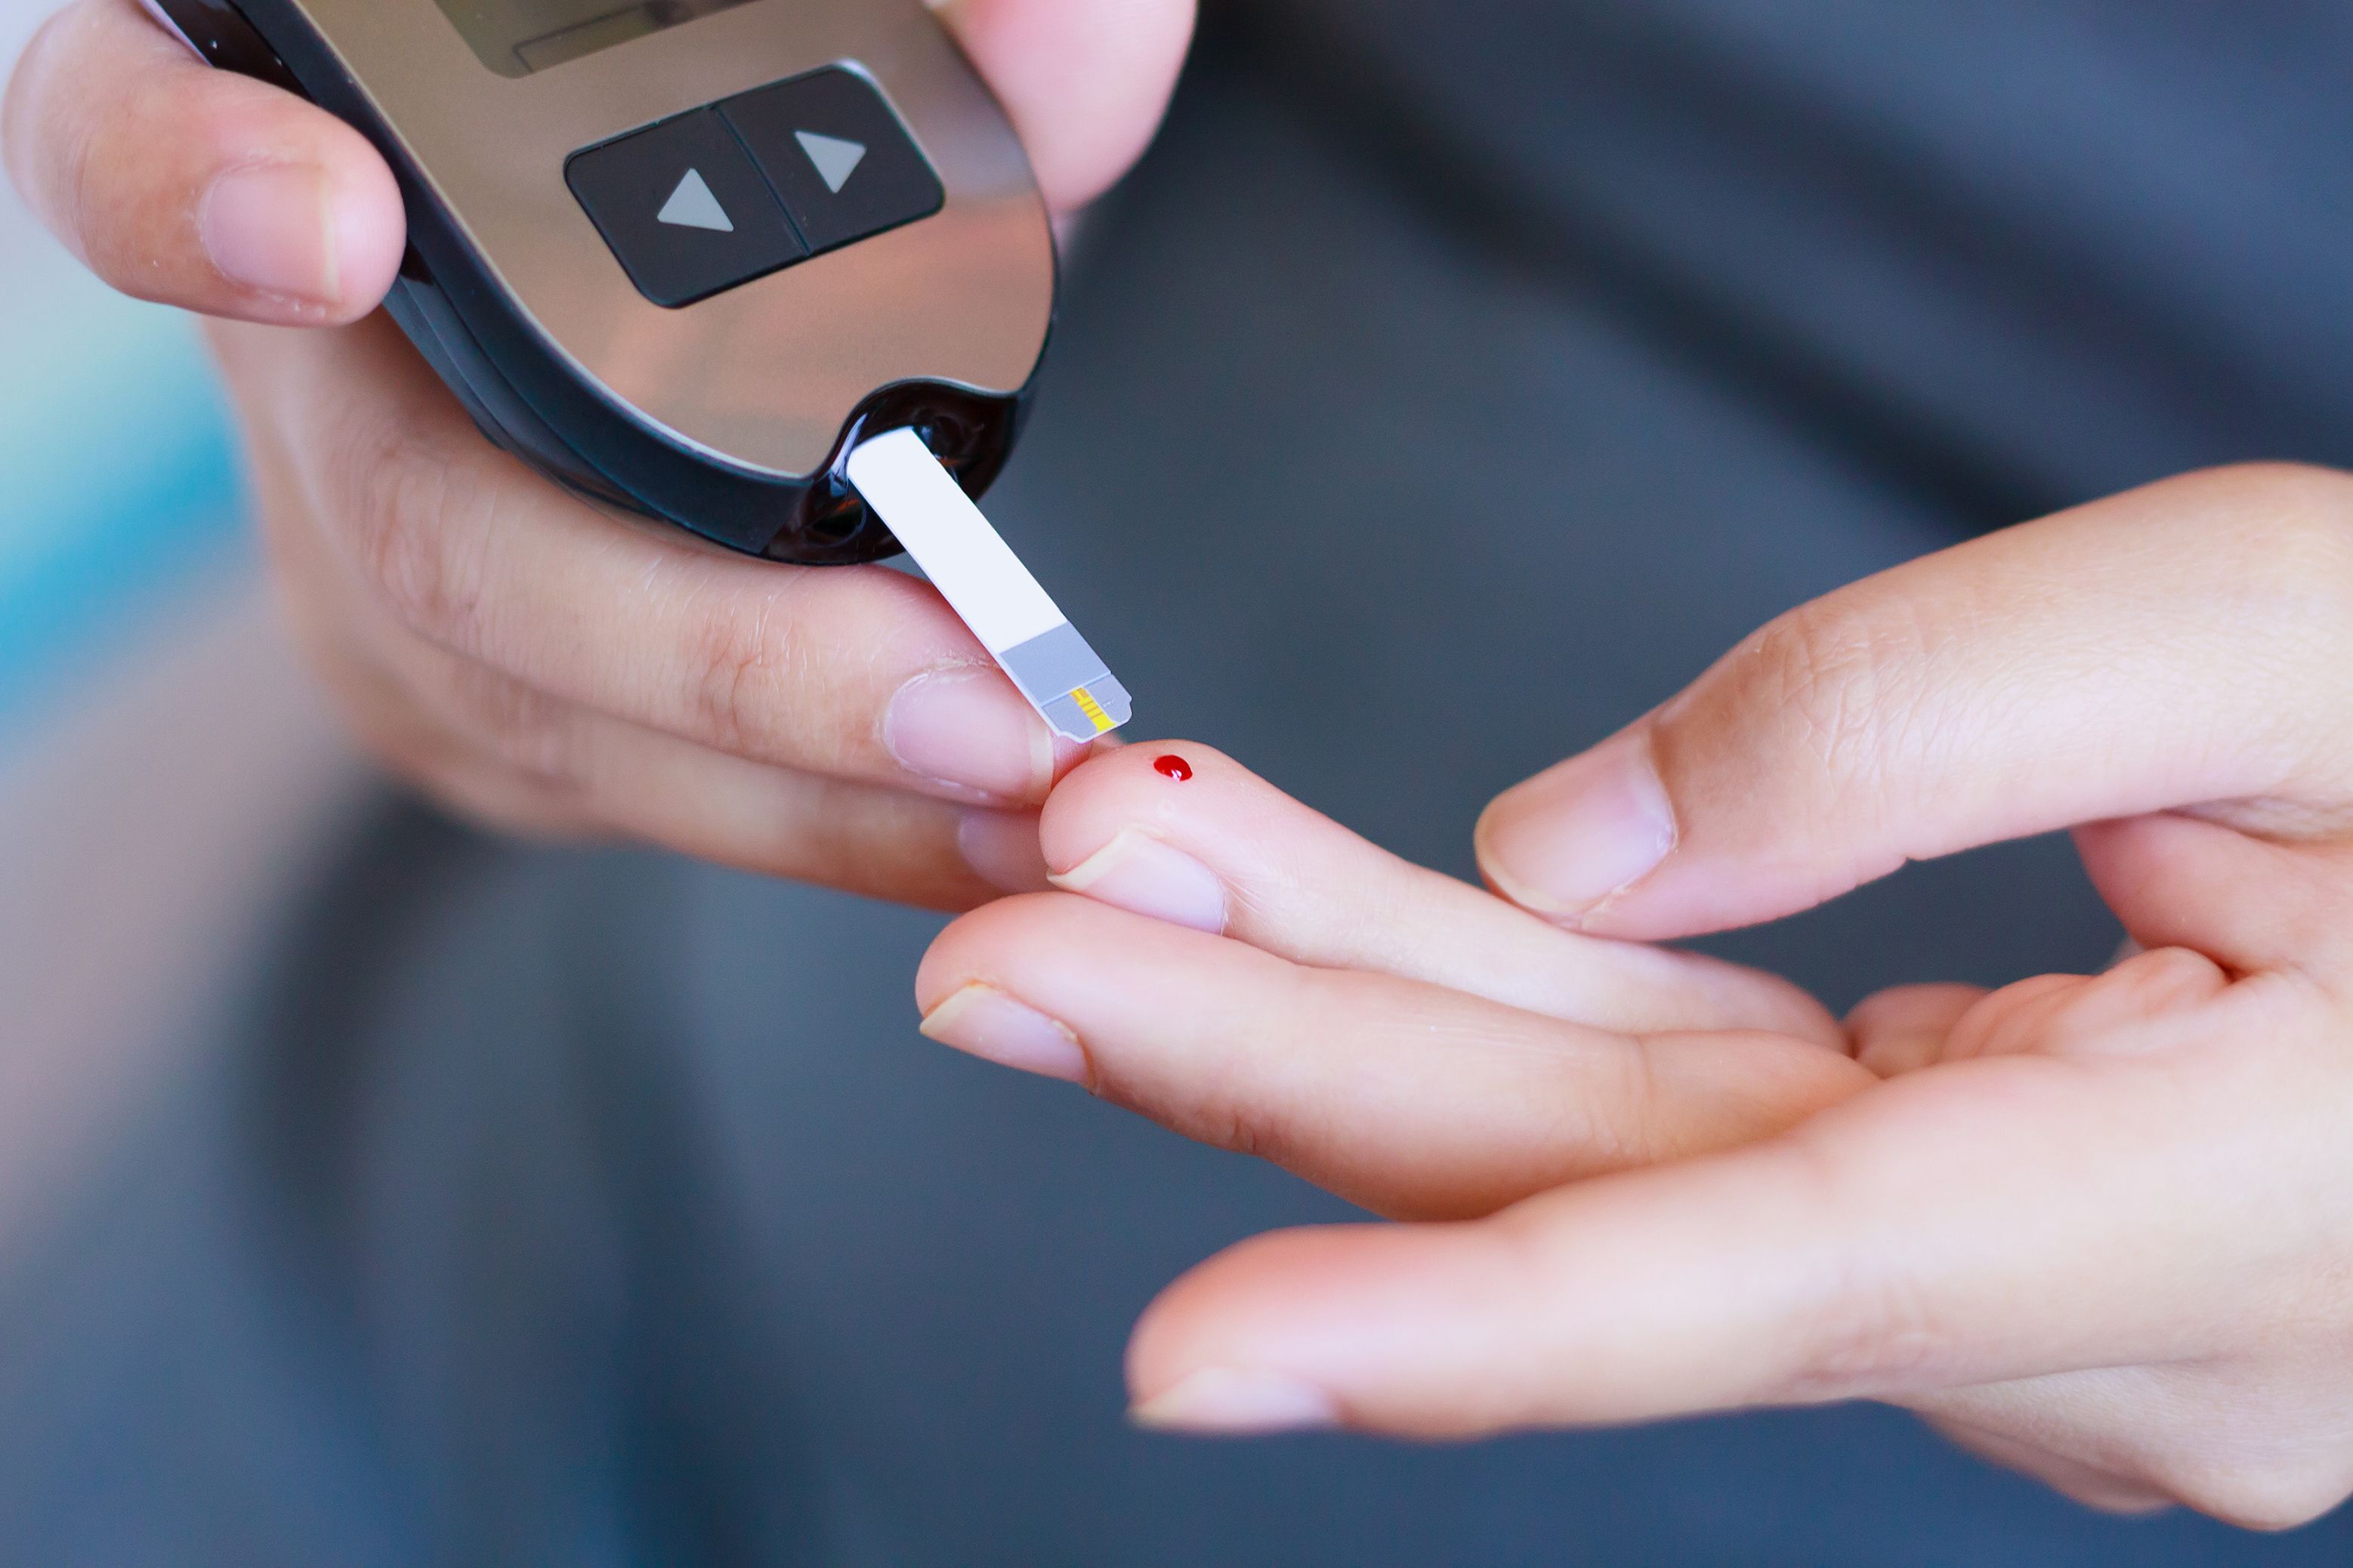 Диабет тест можно. Сахарный диабет. Диабет картинки. Глюкометр и инсулин. Измерение сахара в крови глюкометром.